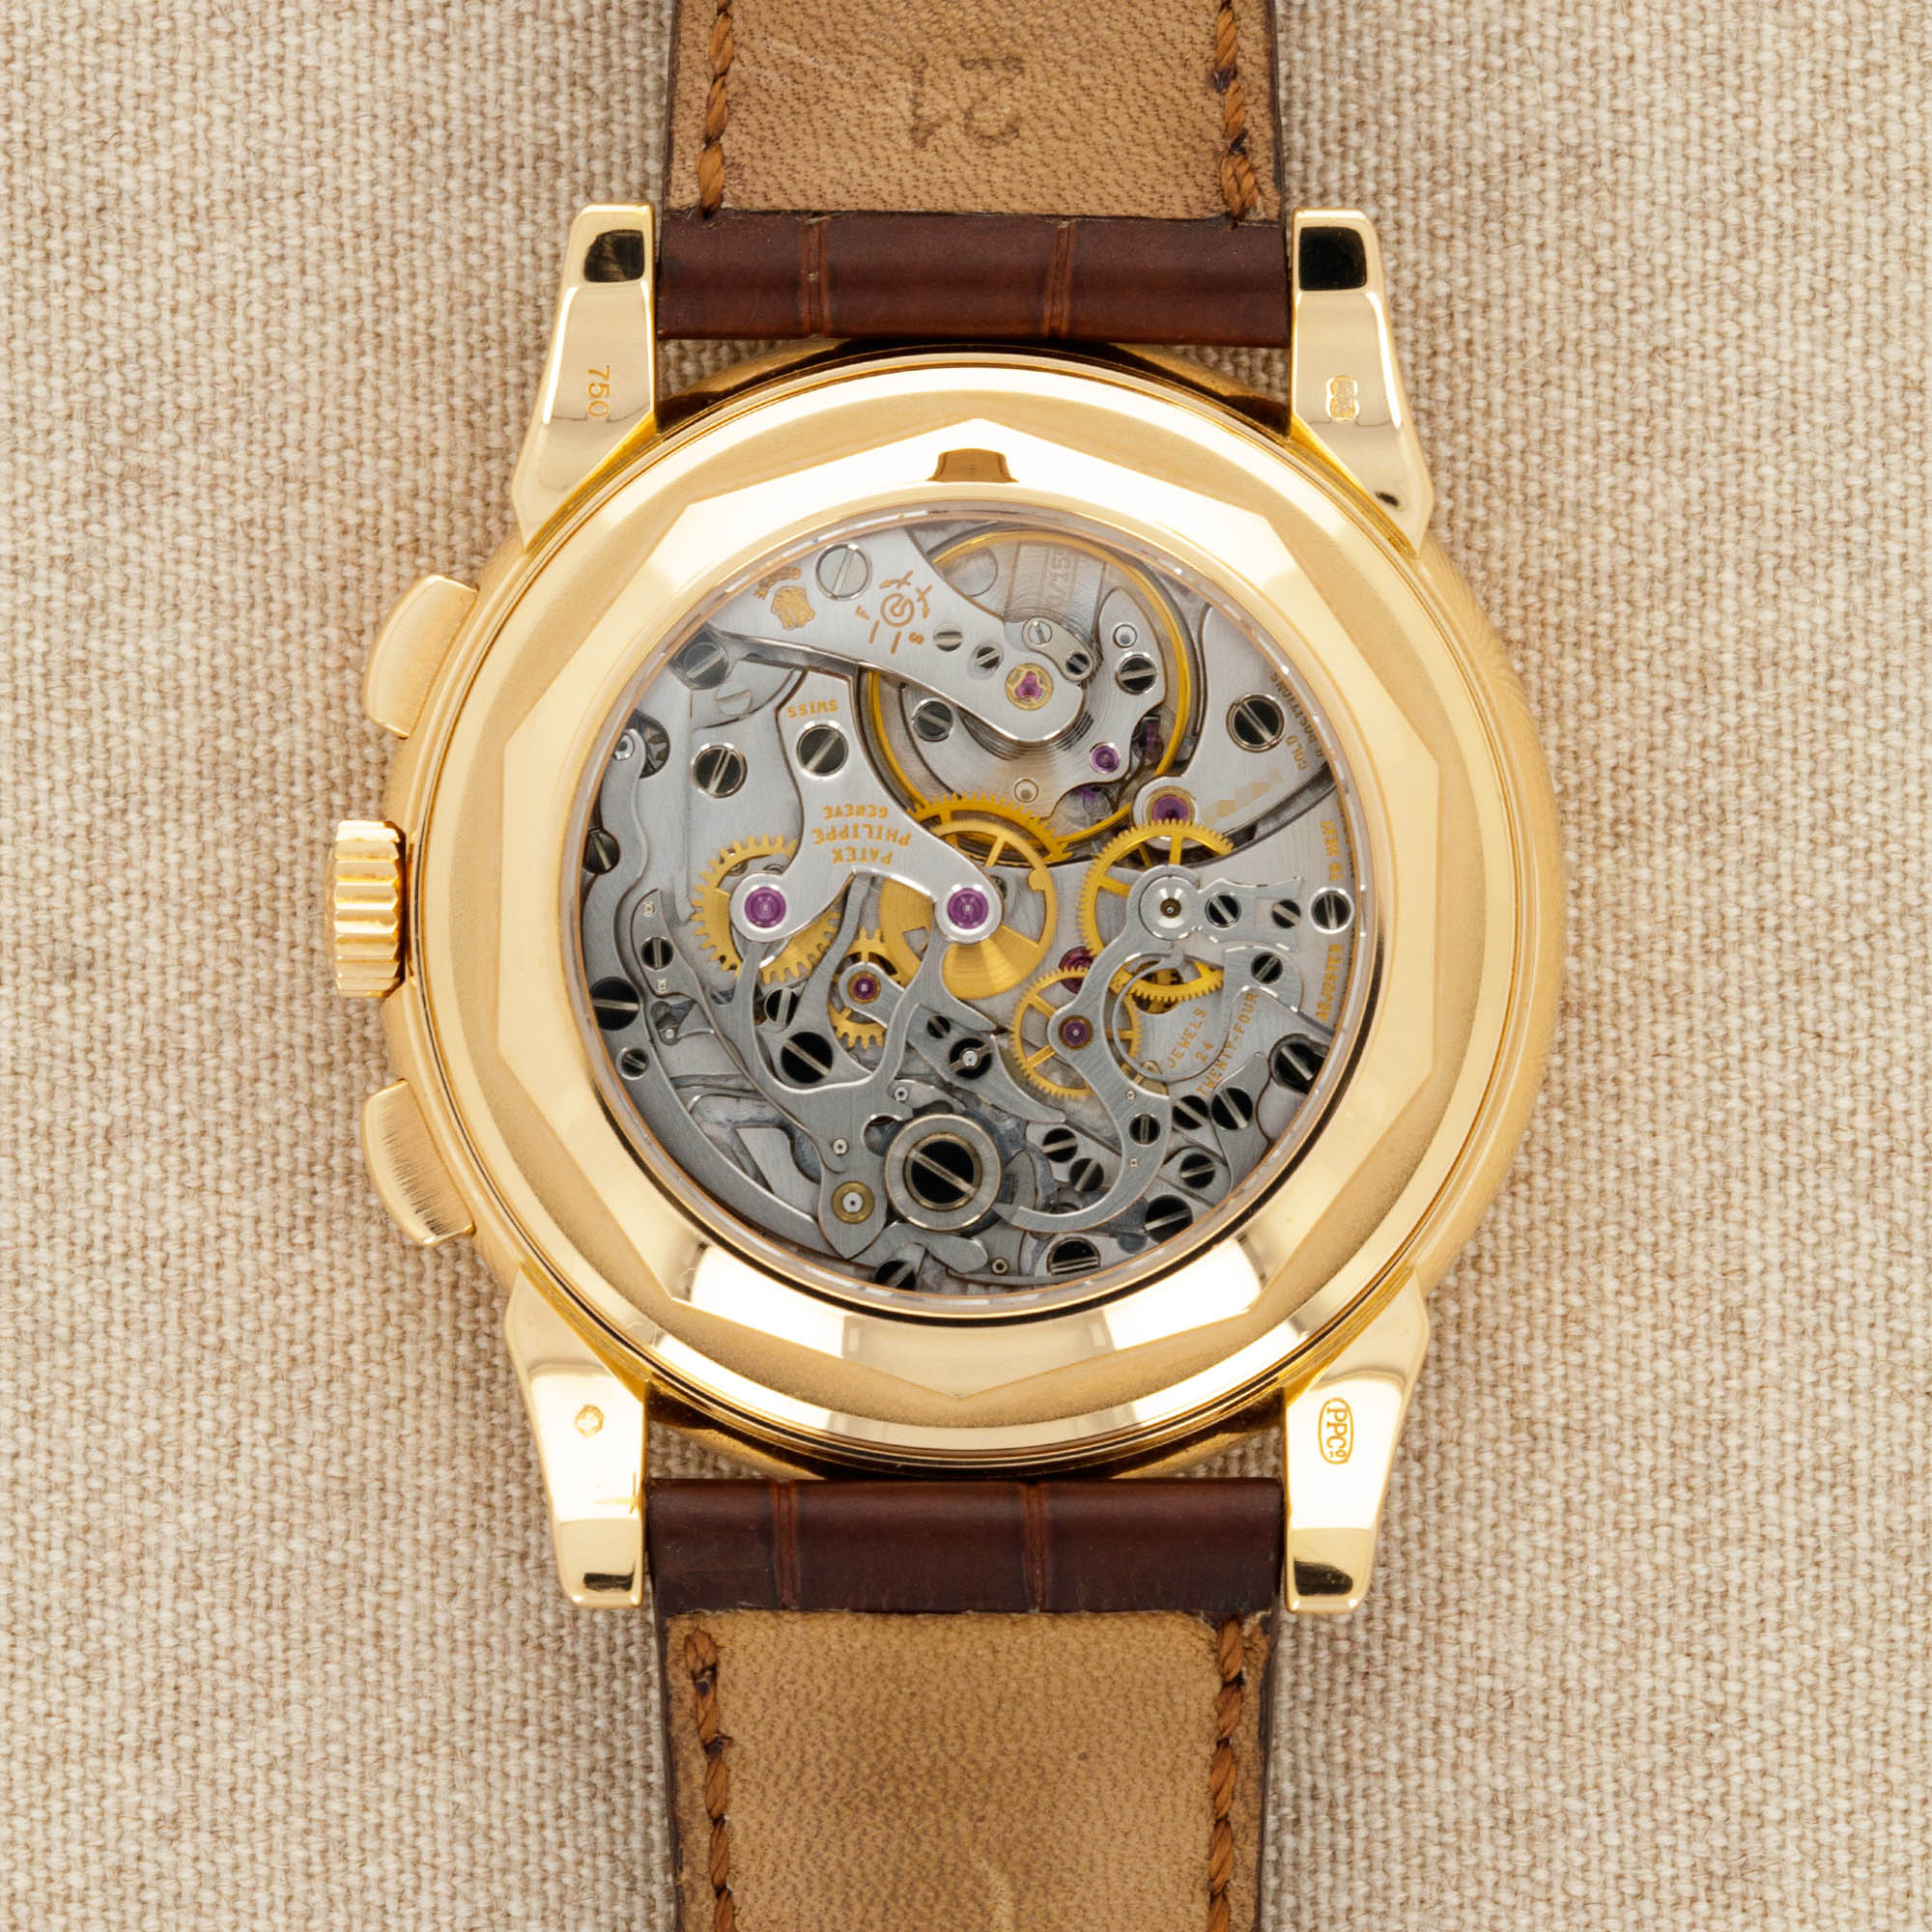 Patek Philippe - Patek Philippe Rose Gold Perpetual Calendar Watch Ref. 5970 - The Keystone Watches